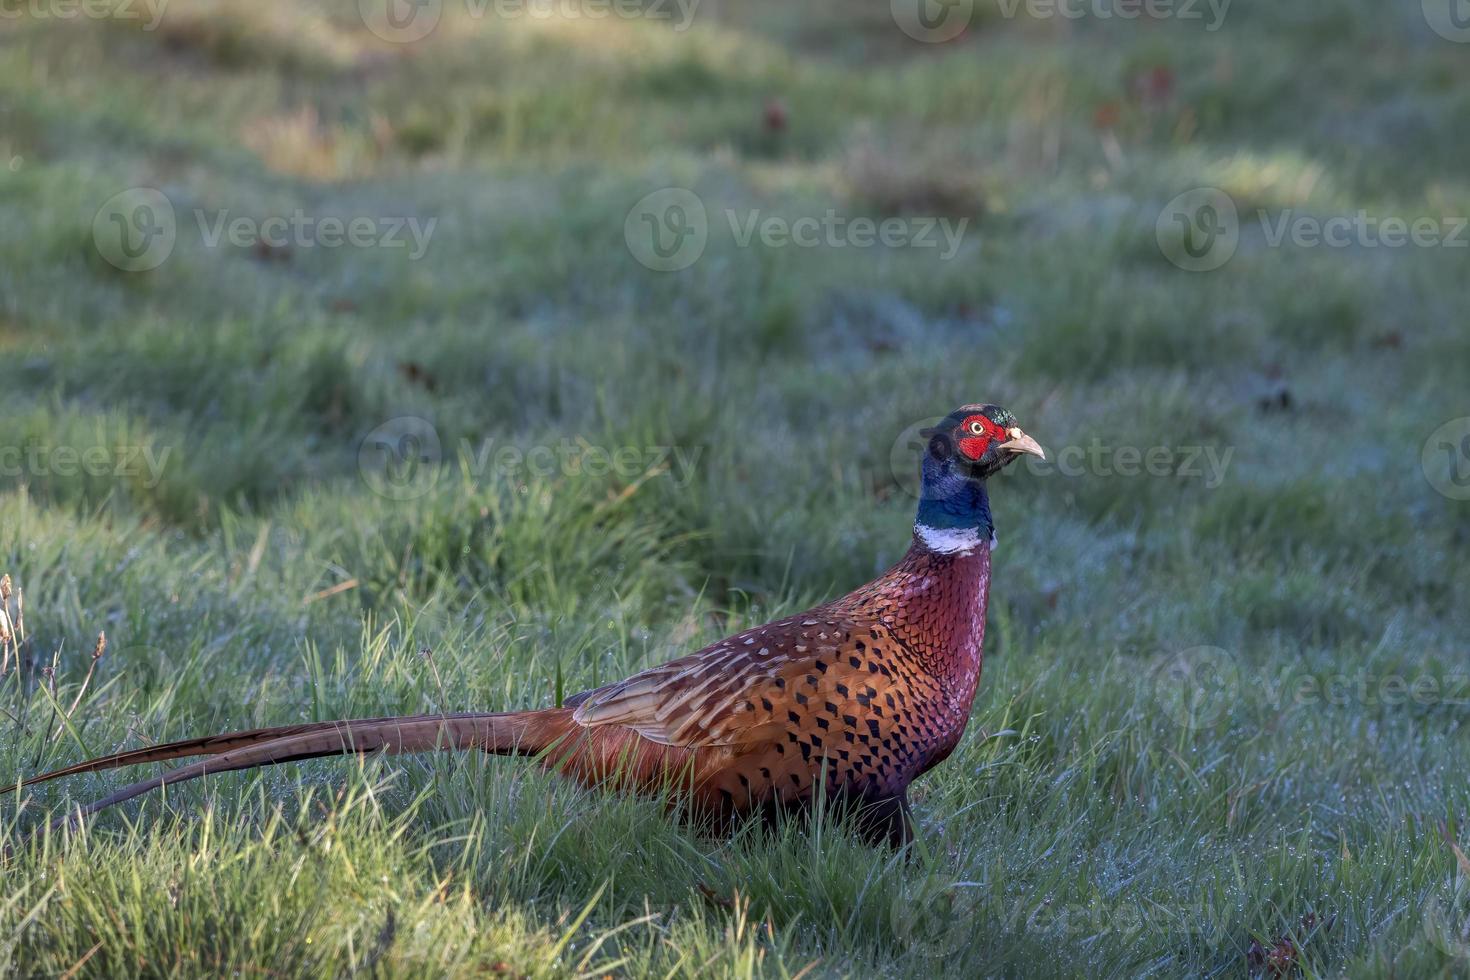 Common Pheasant walking across a field in East Grinstead photo